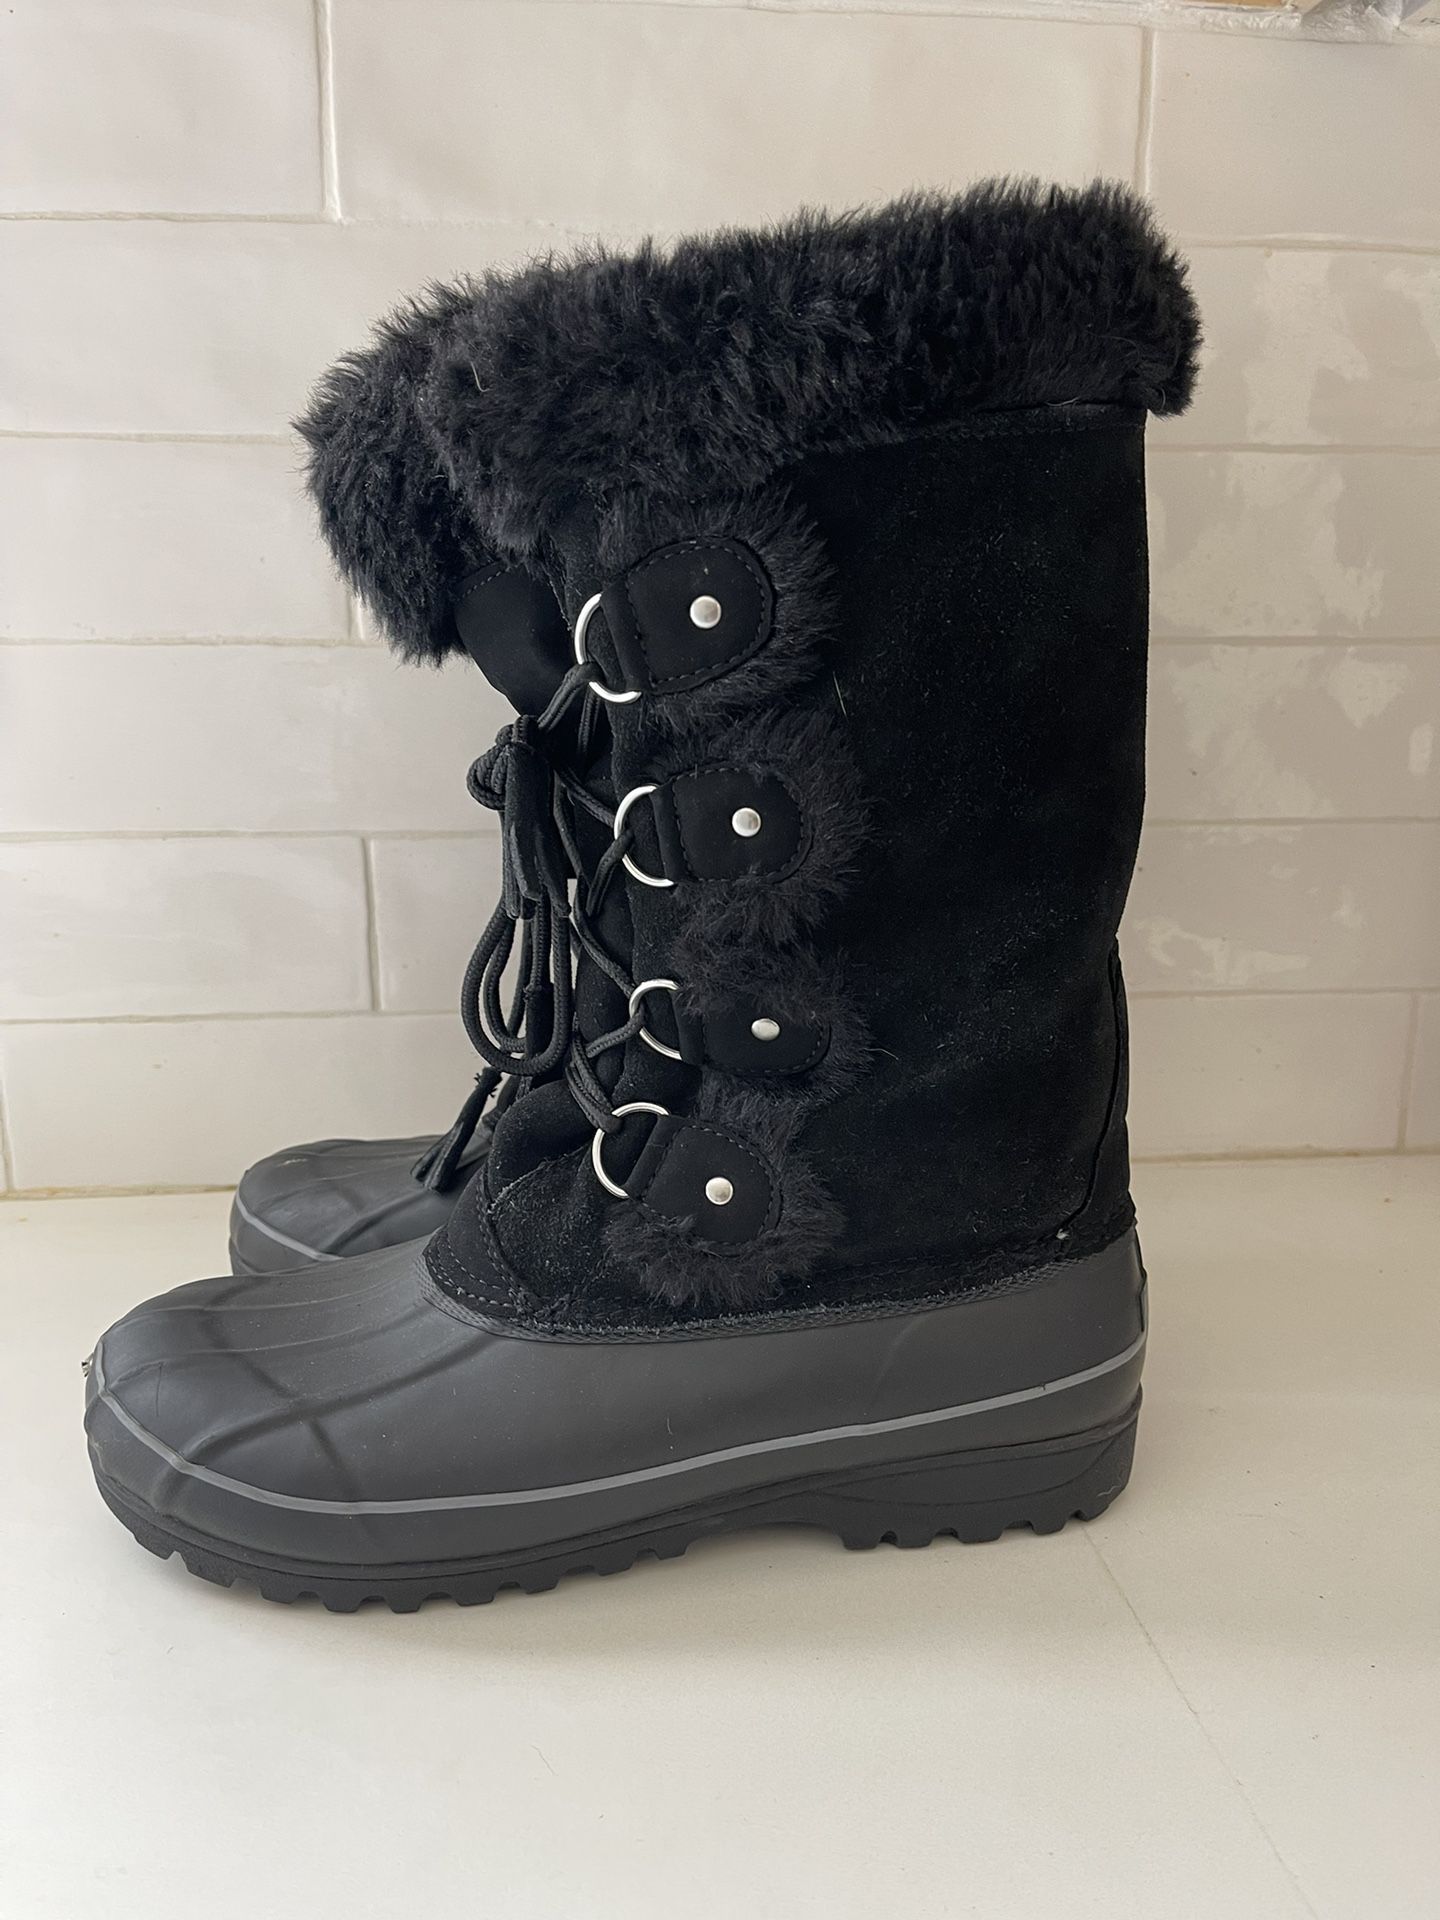 KHOMBU Ladies Size 9 Snow Boots